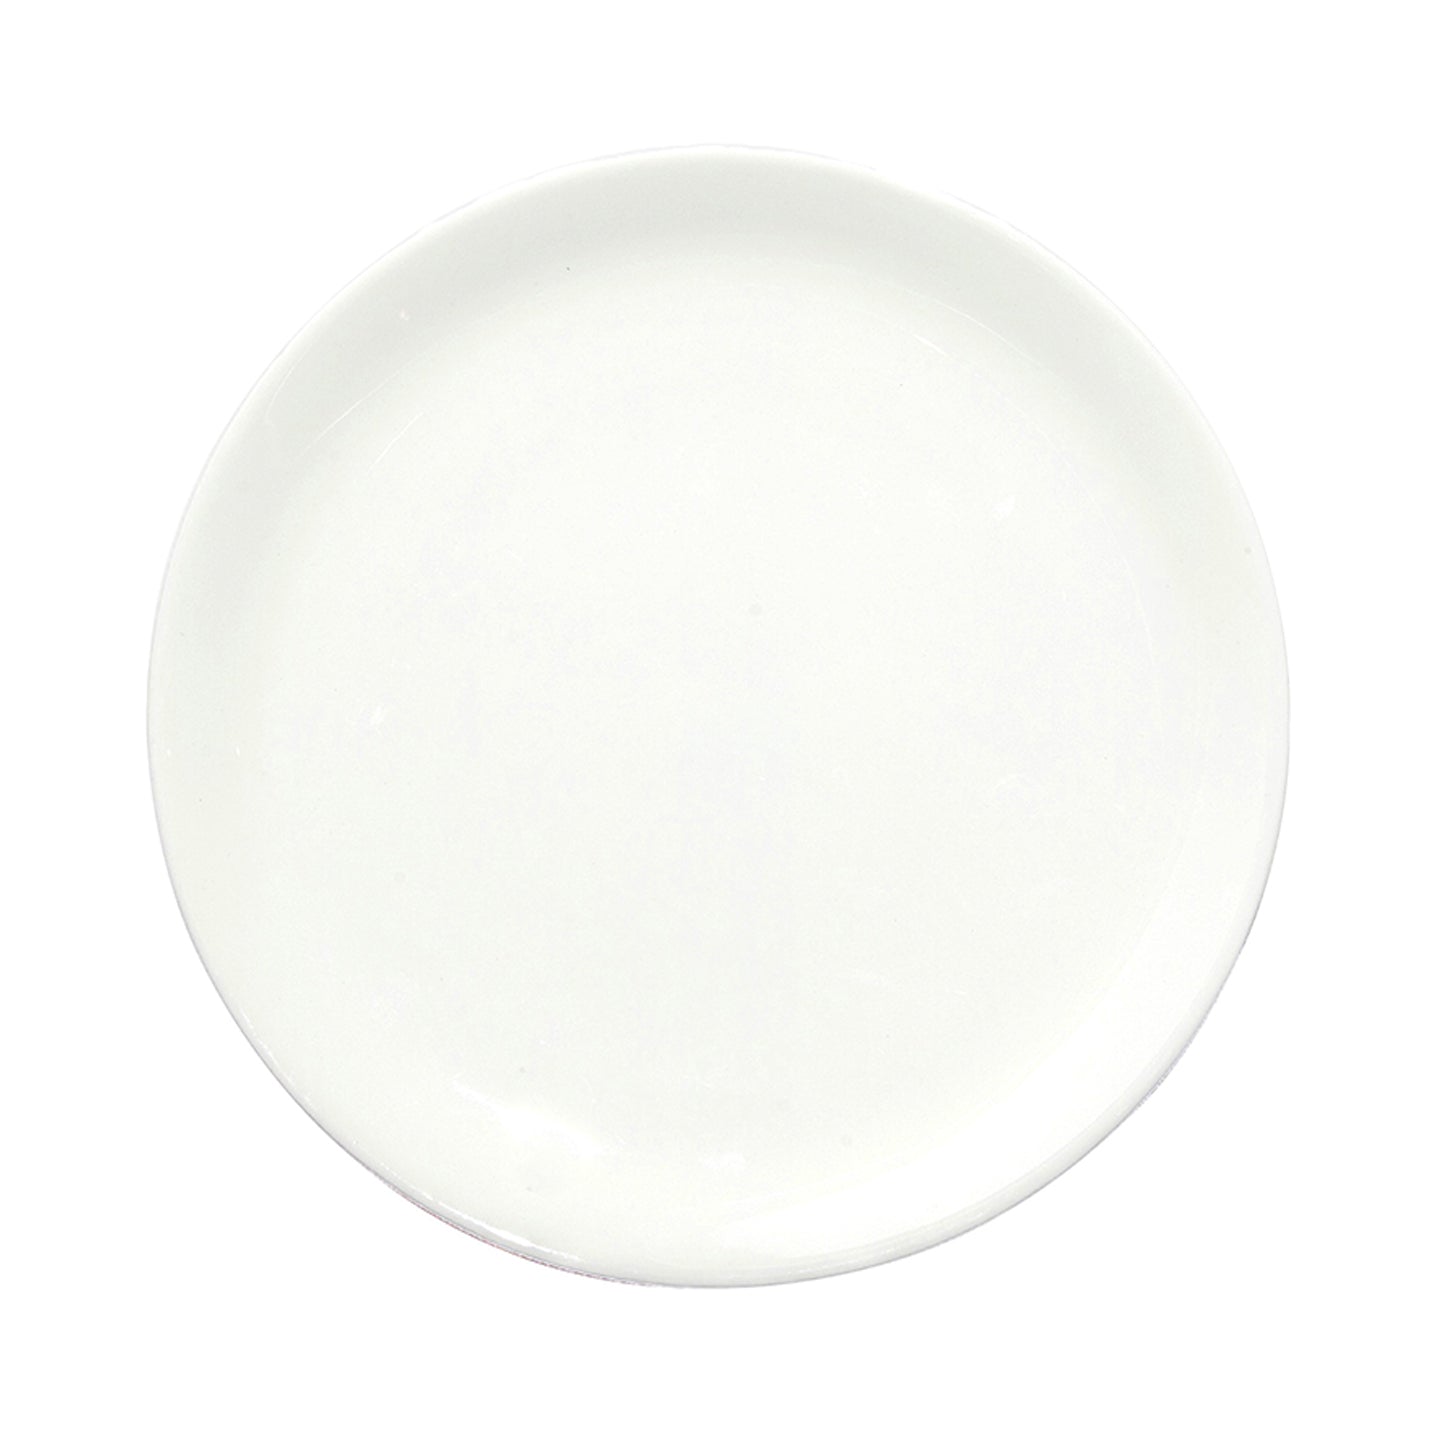 A Table Dinner Plate